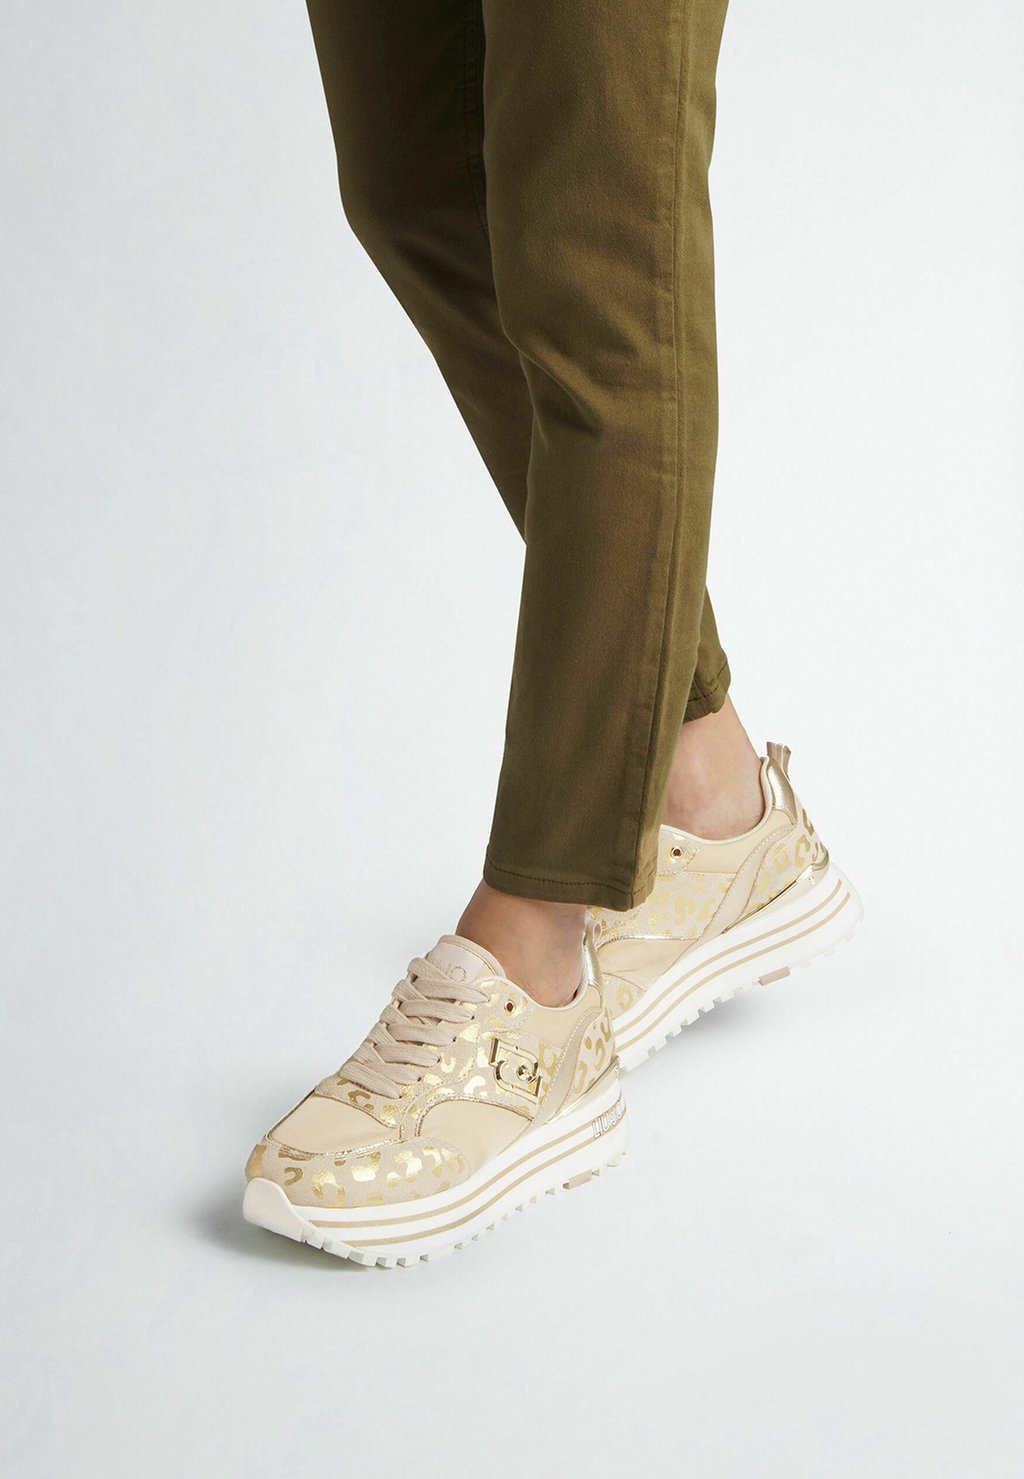 Низкие кроссовки With Animal-Print LIU JO, цвет gold colour кроссовки низкие liu jo brighty mesh platform sneakers цвет silver colour